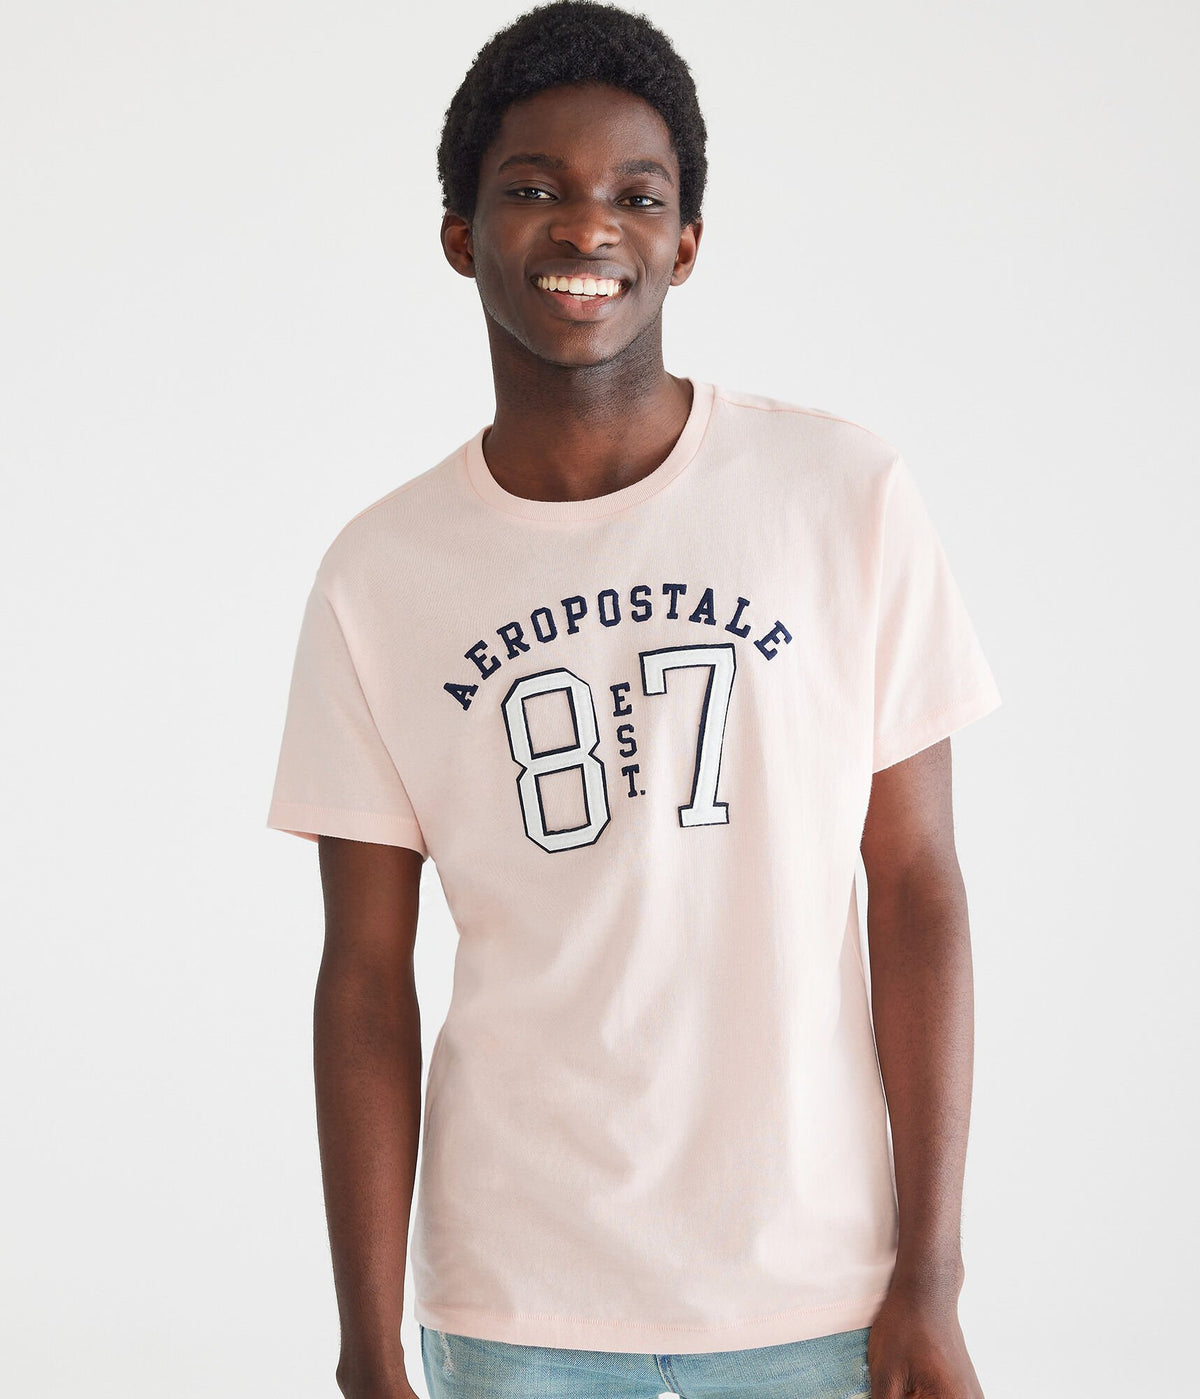 Aeropostale Mens' Aeropostale Split 87 Applique Graphic Tee - Pink - Size XL - Cotton - Teen Fashion & Clothing Pink Chiffon